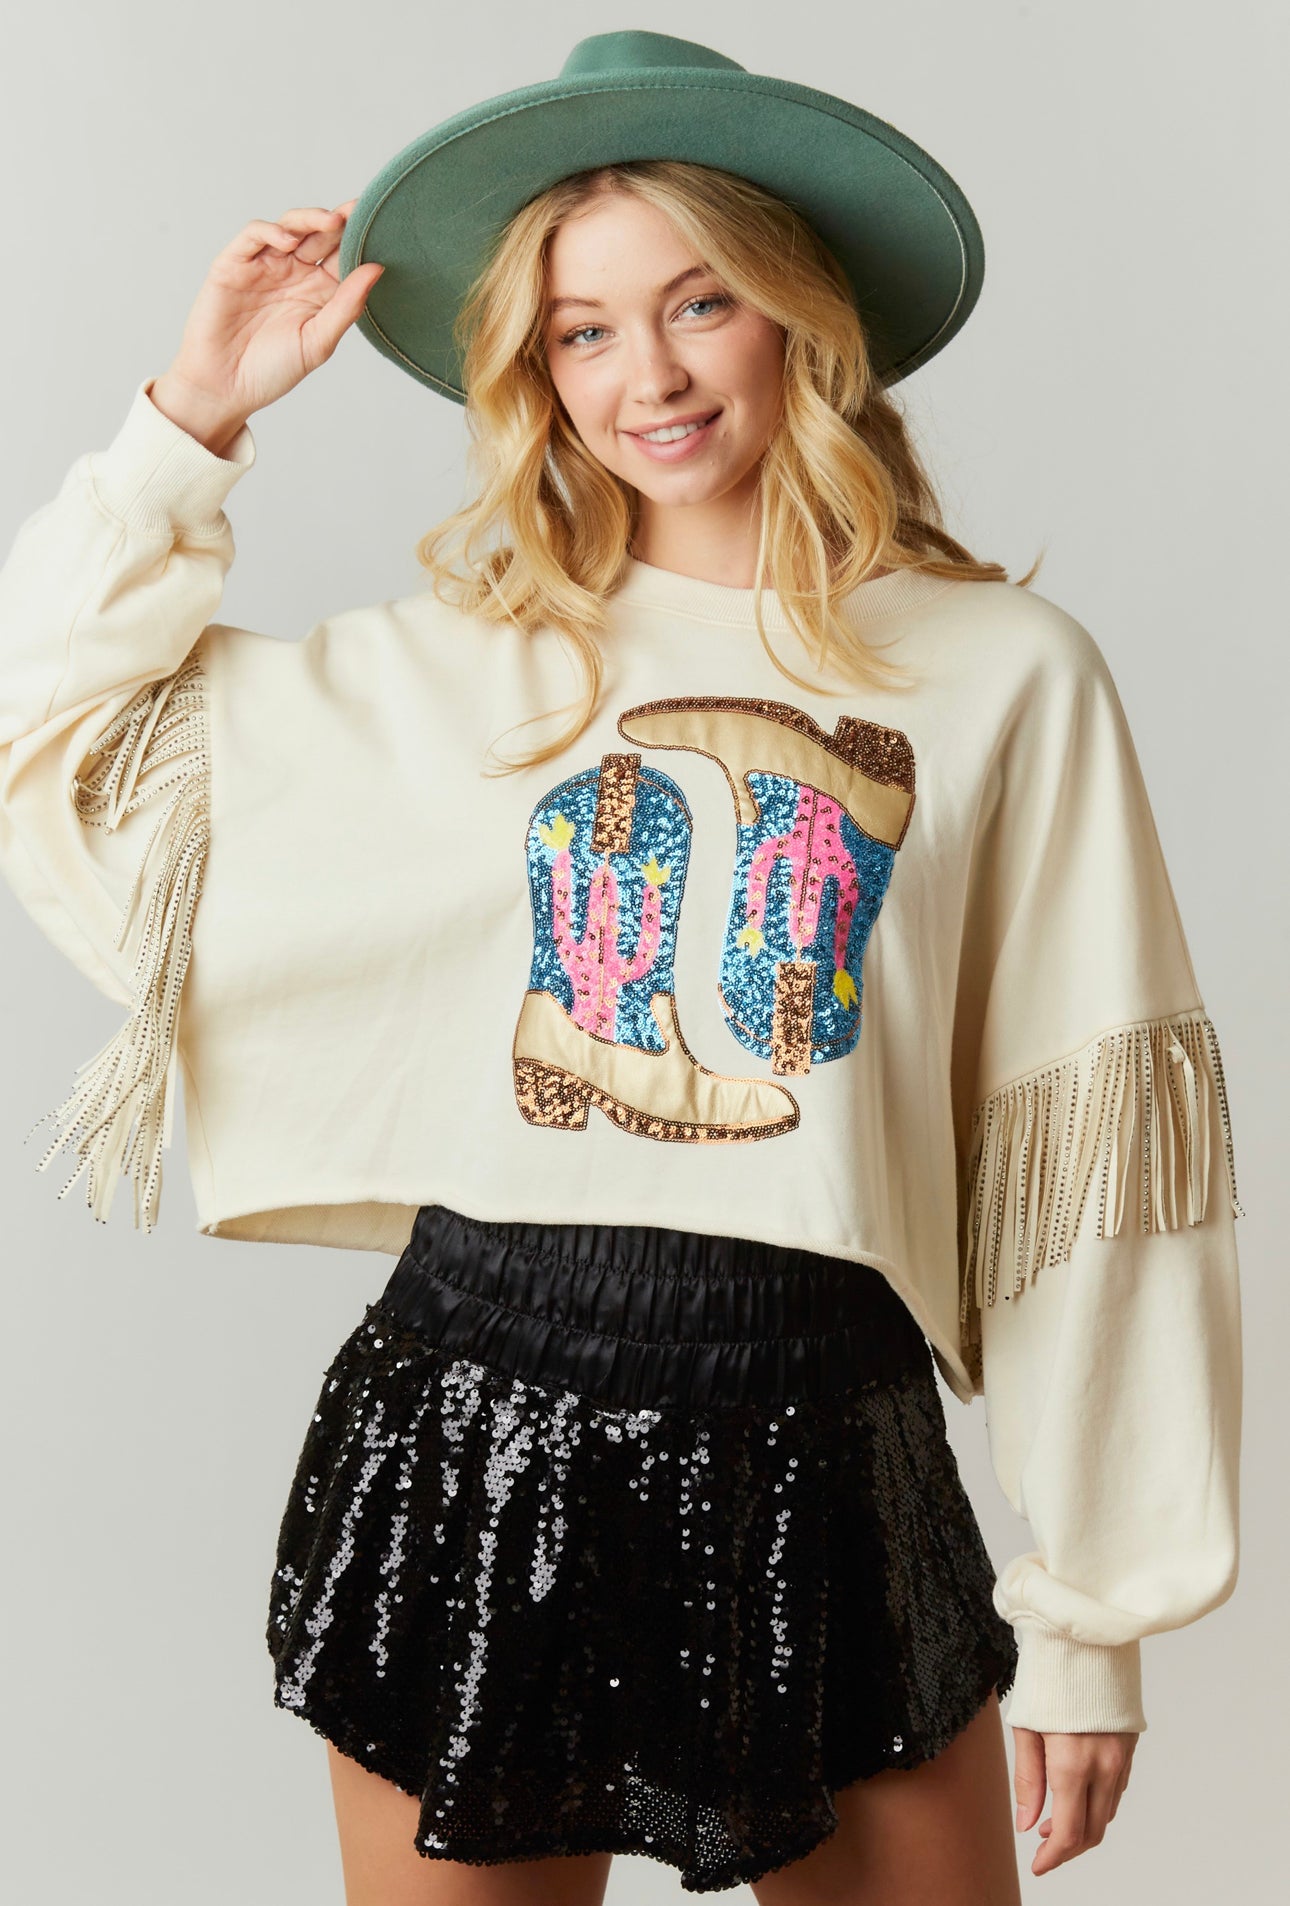 Glam Cowgirl Sweatshirt